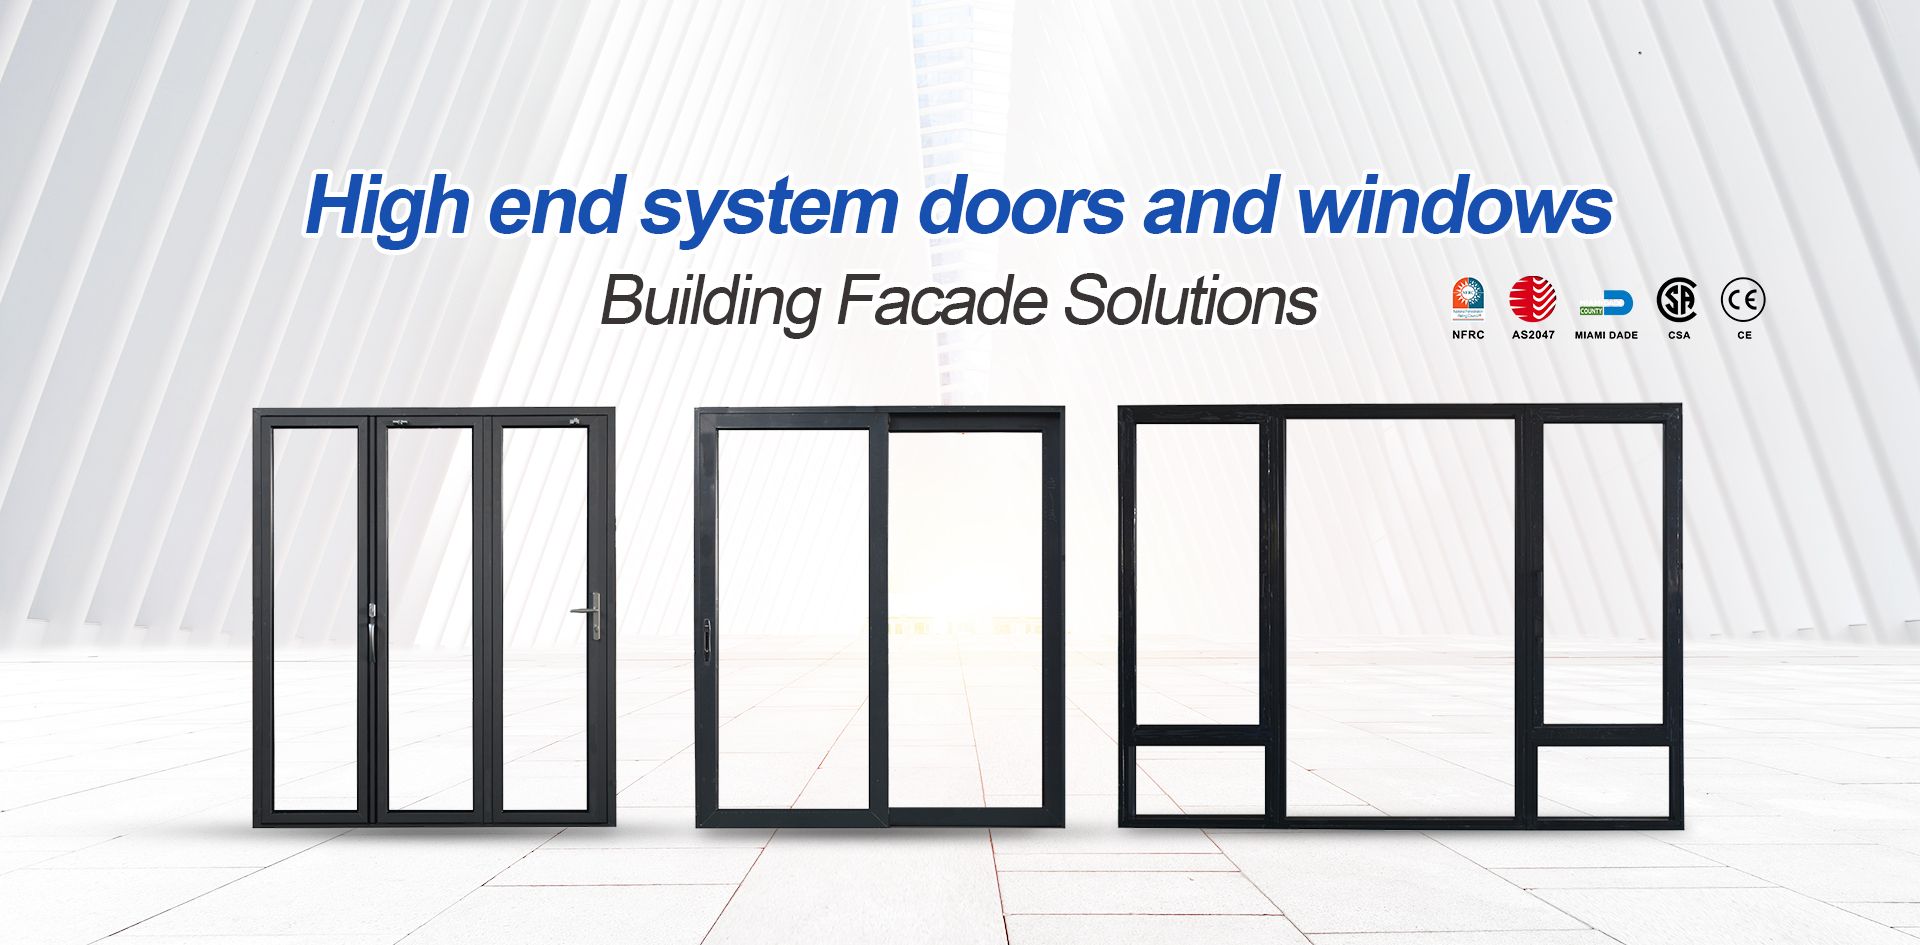 Foshan NF windows and doors system CO.,LTD.